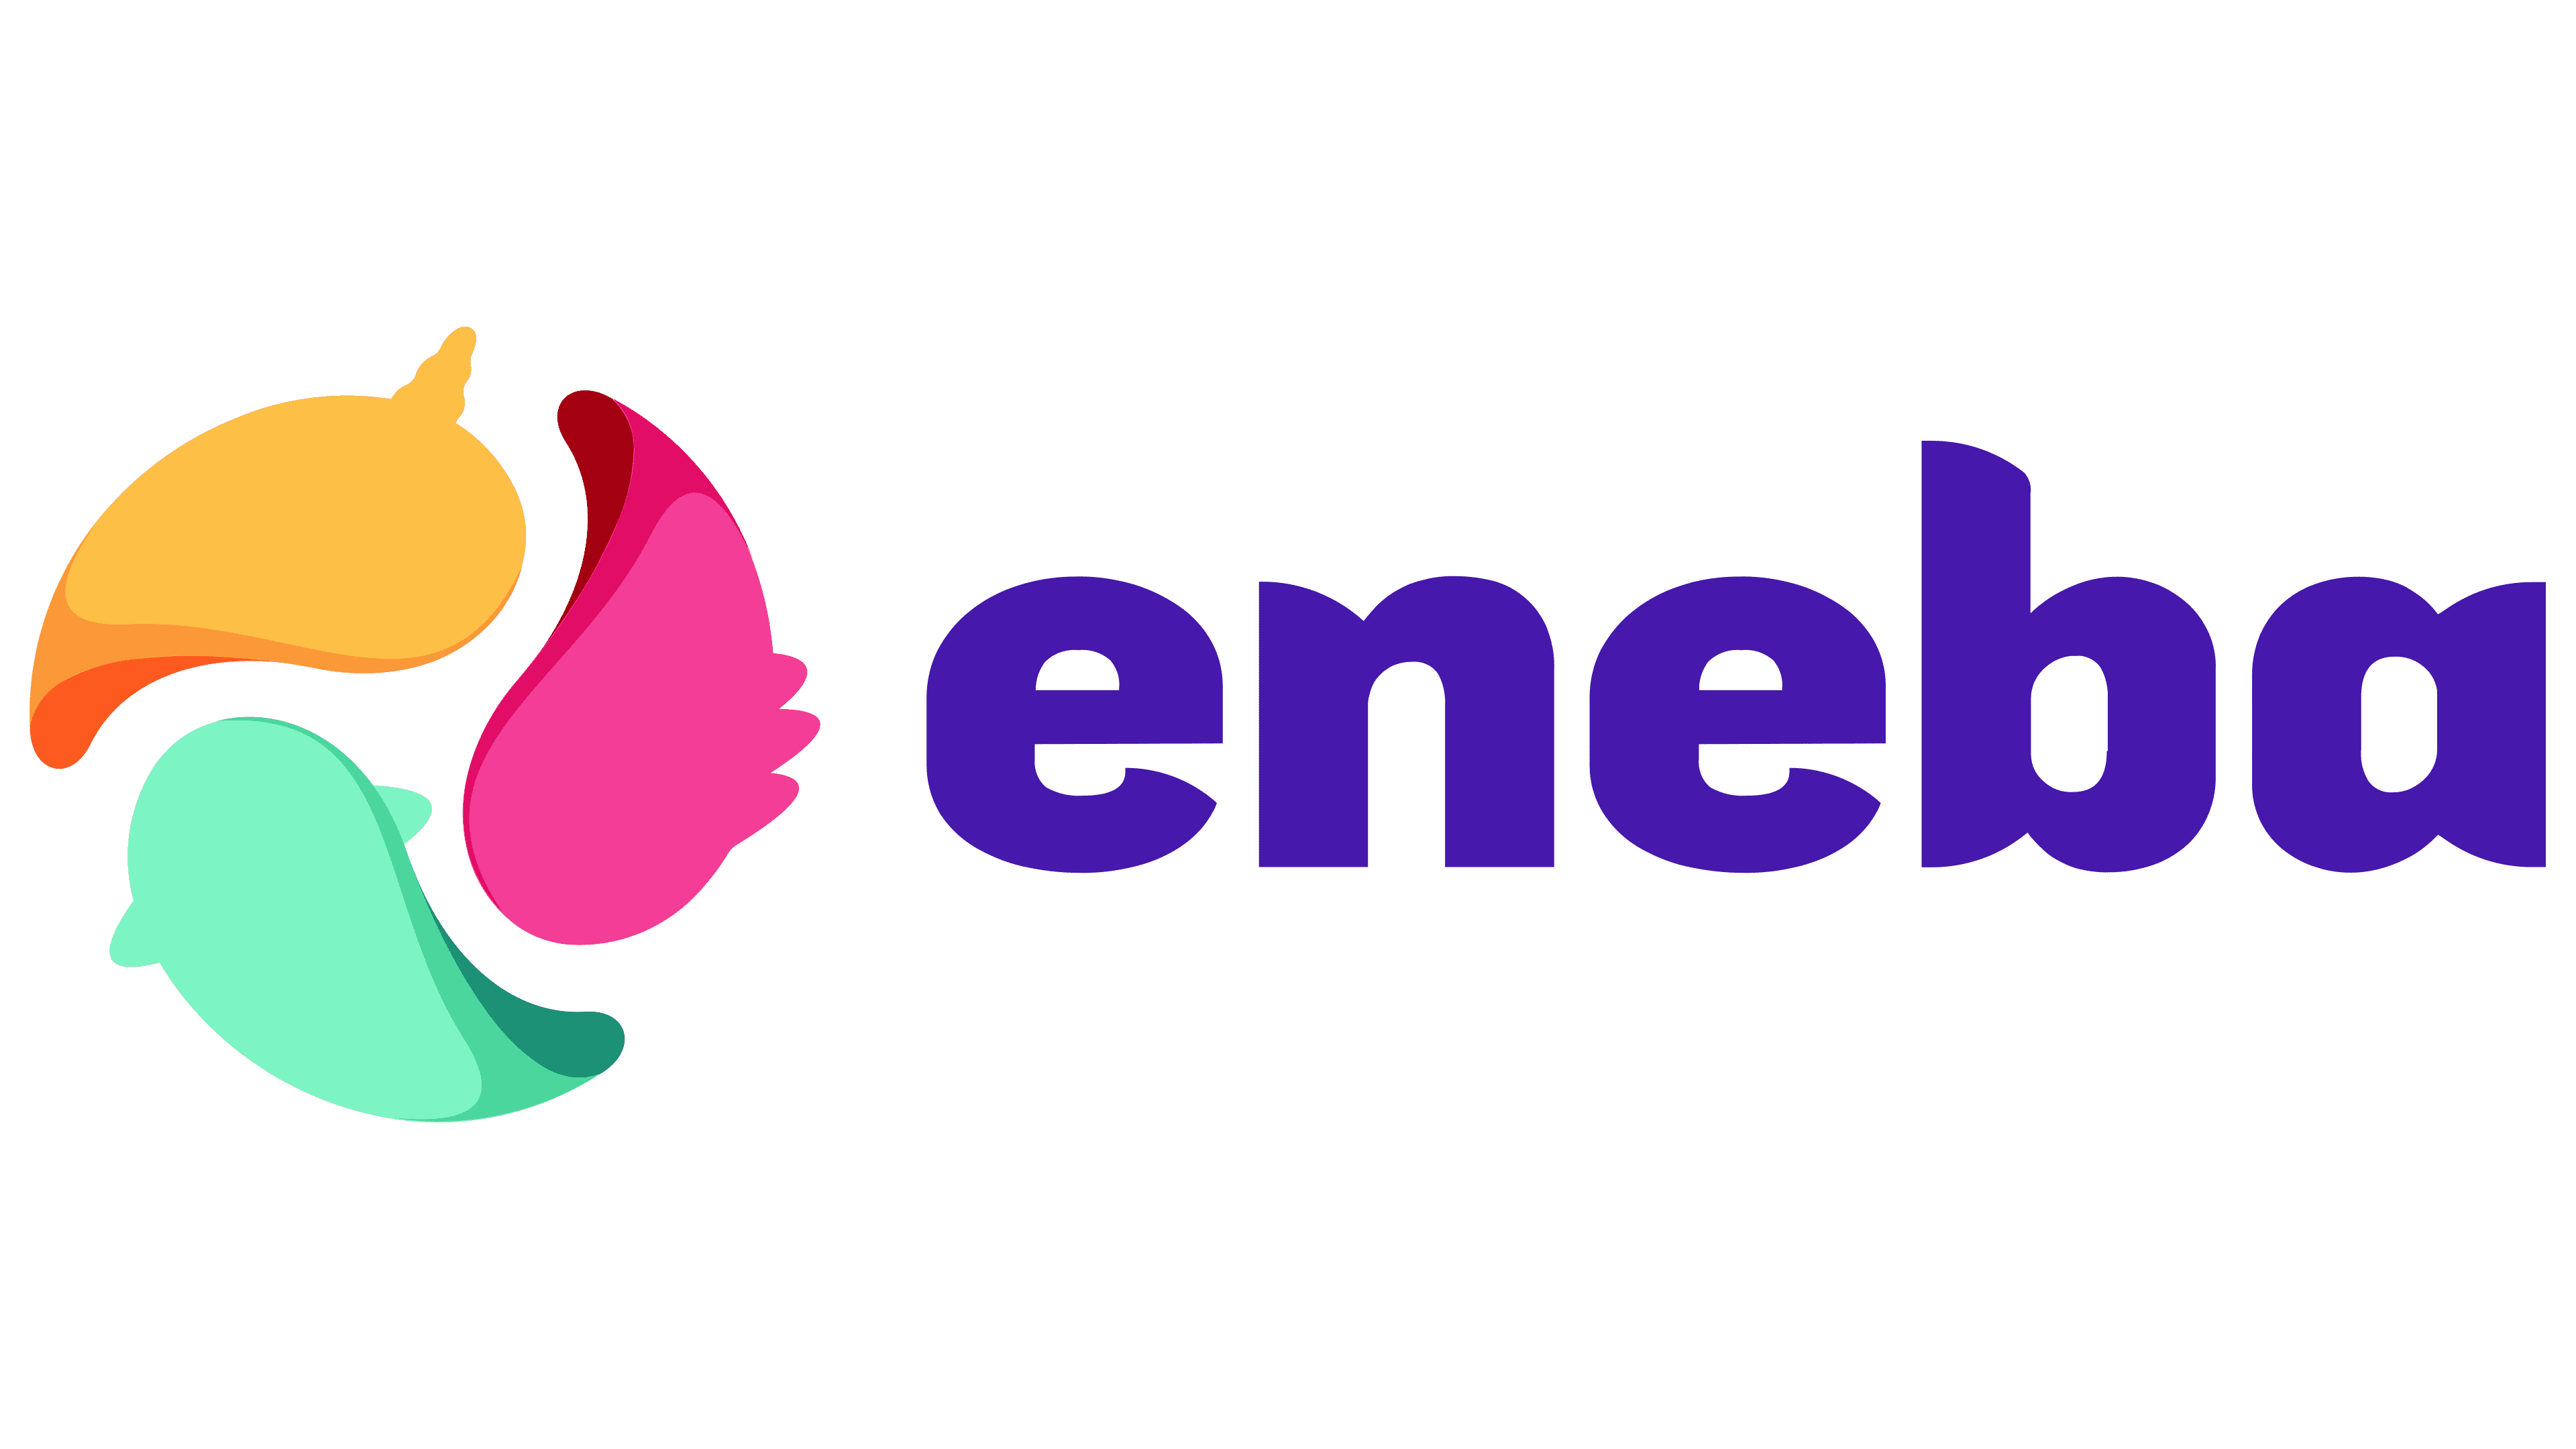 Eneba Logo, symbol, meaning, history, PNG, brand